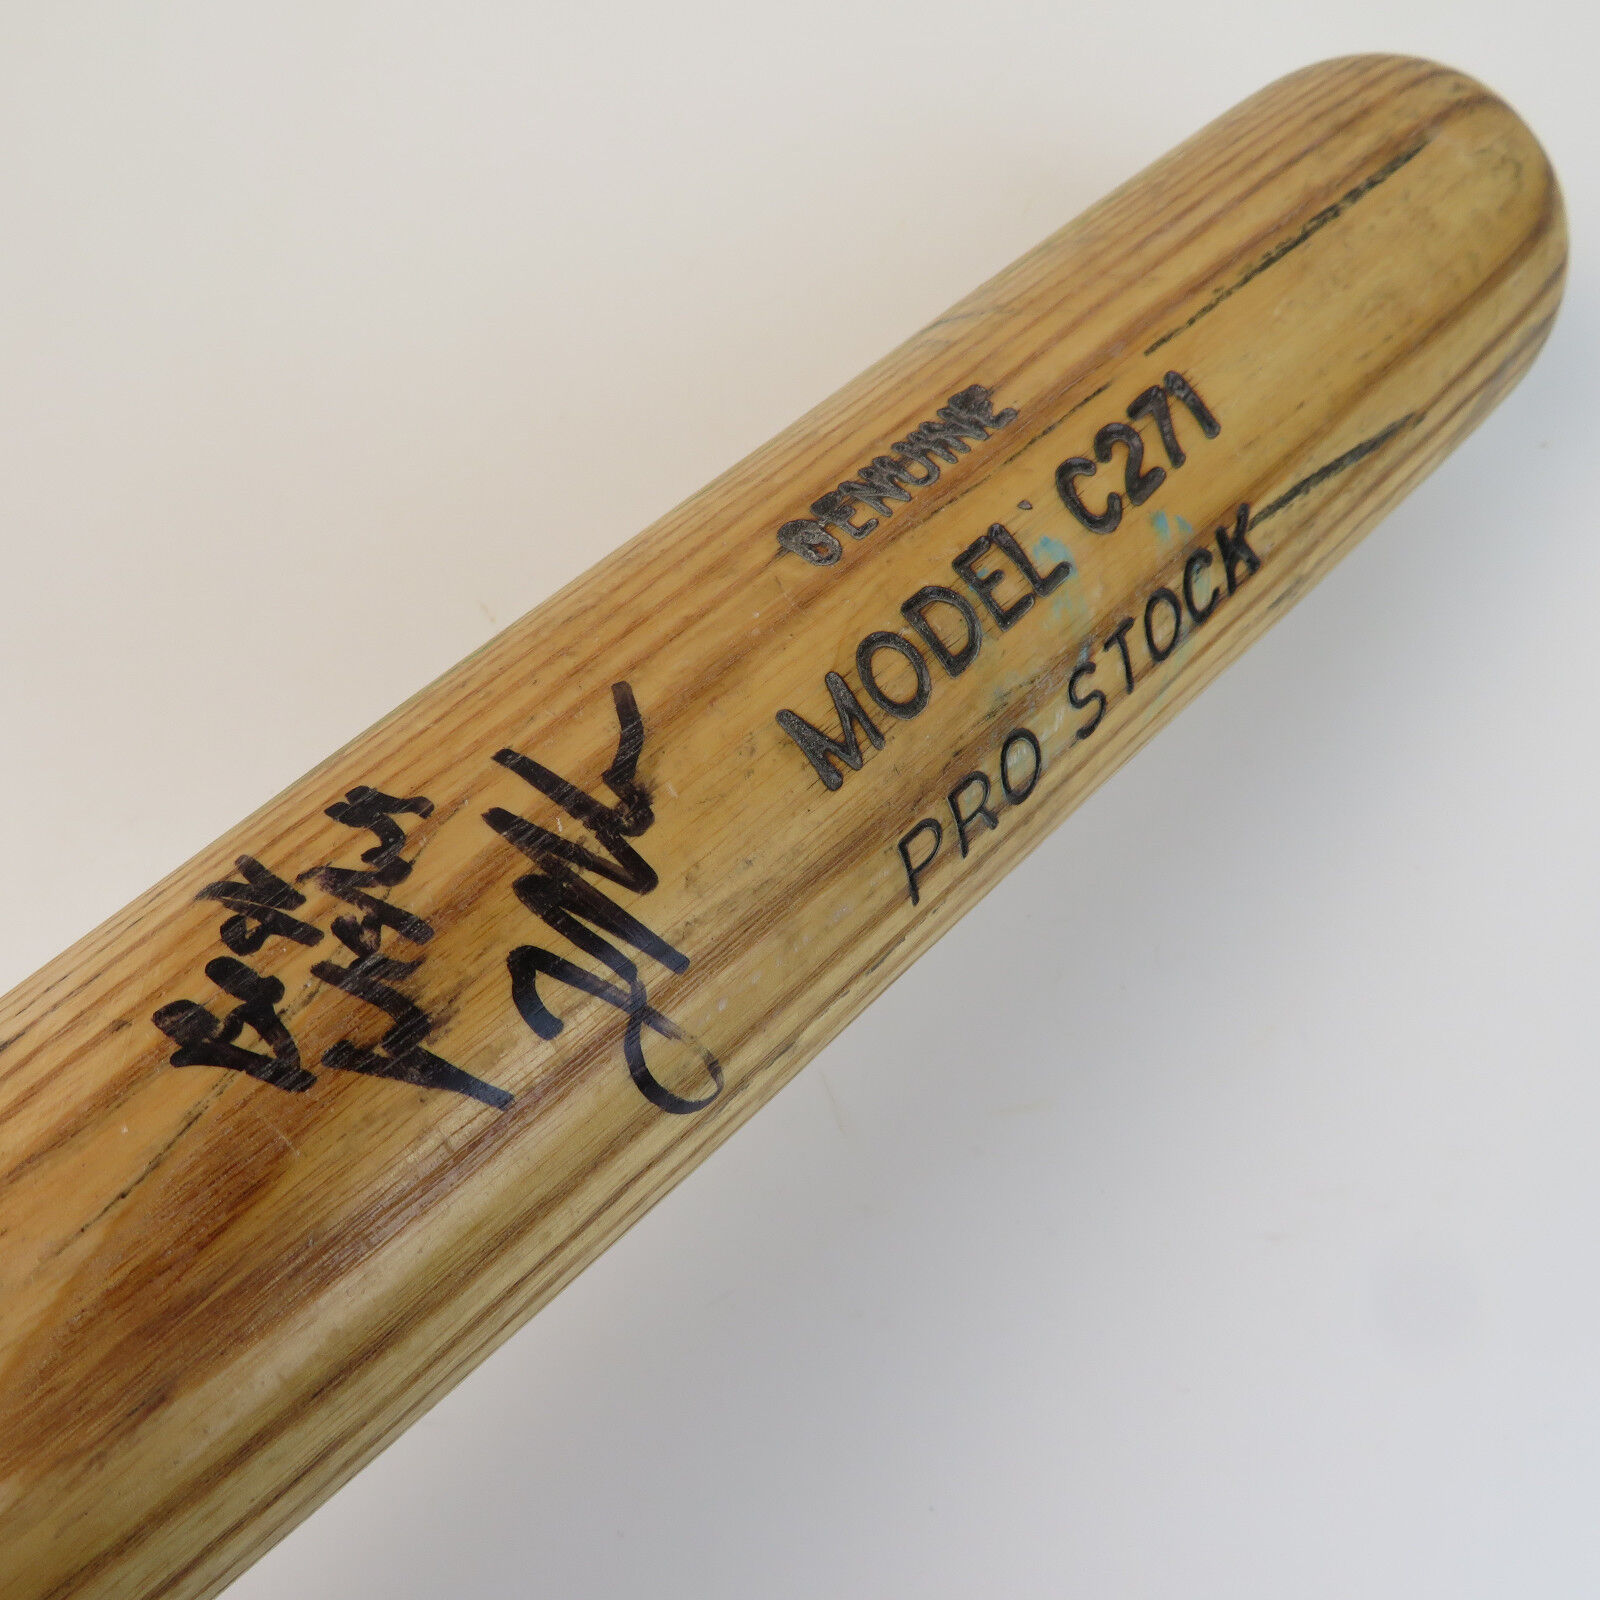 Joe Mauer Signed Game Used Cracked Baseball Bat - Minnesota Twins Auto Autograph